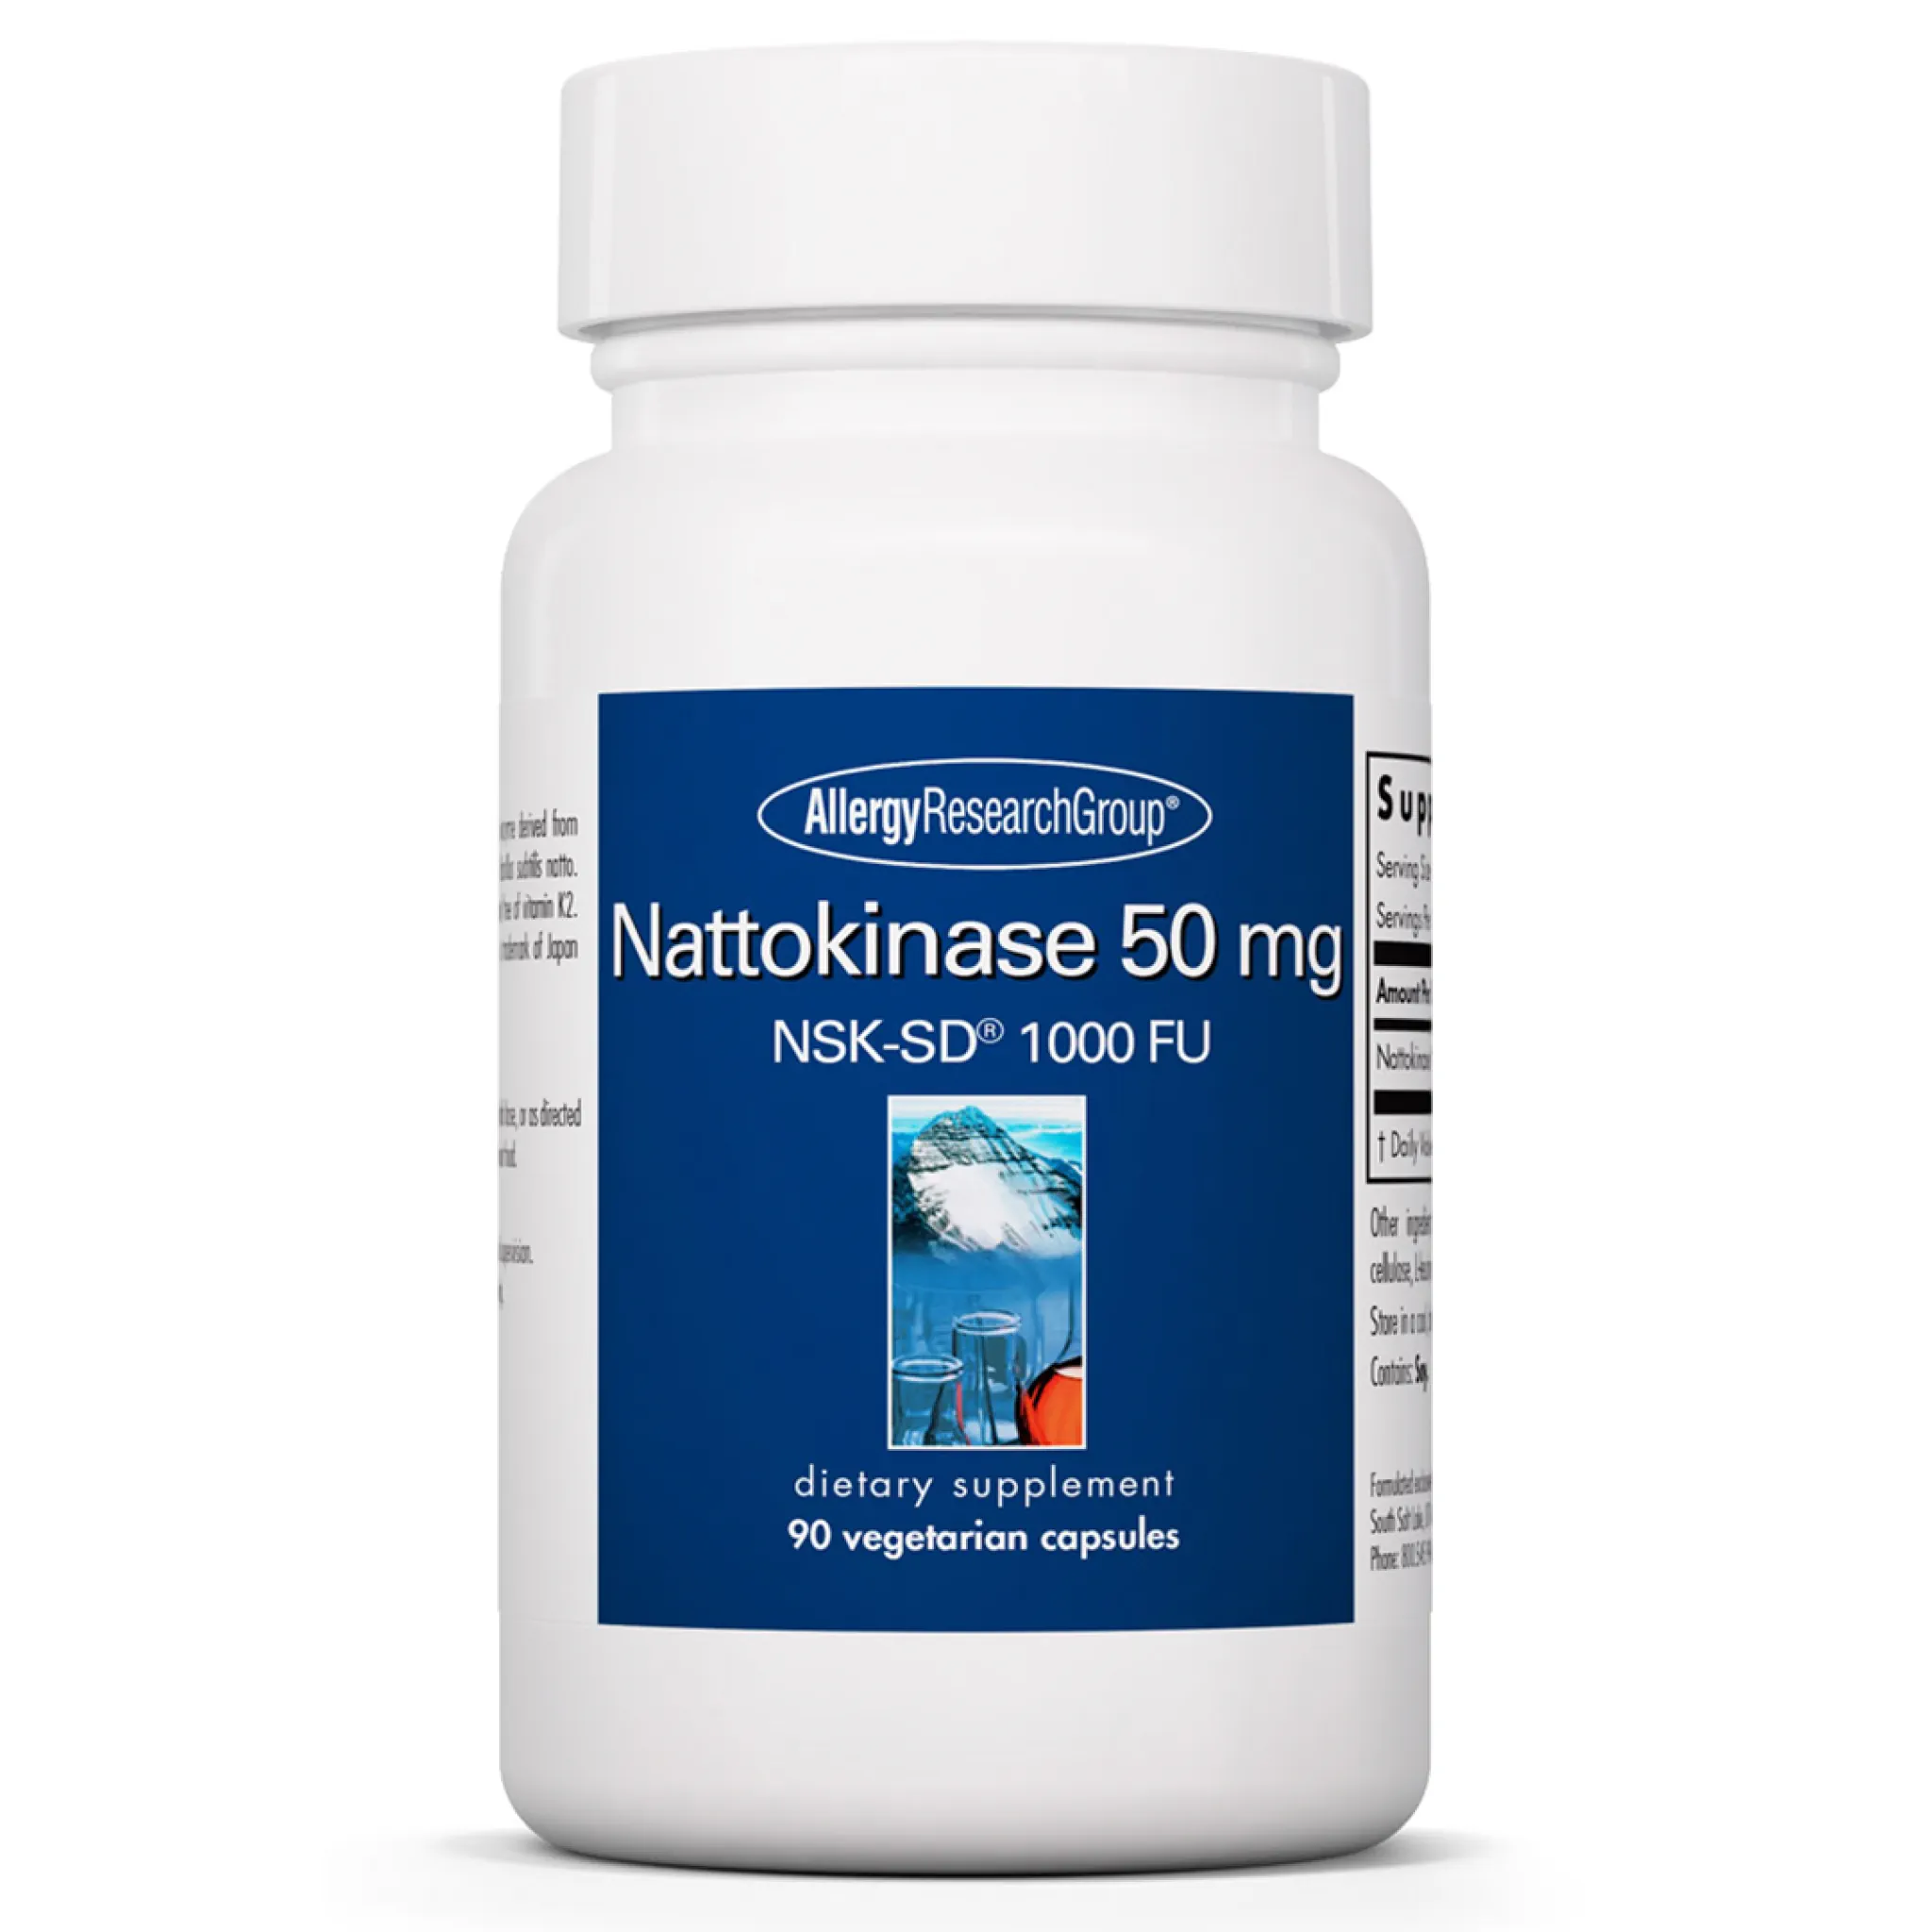 Allergy Research Group - Nattokinase Nsk Sd 50 mg